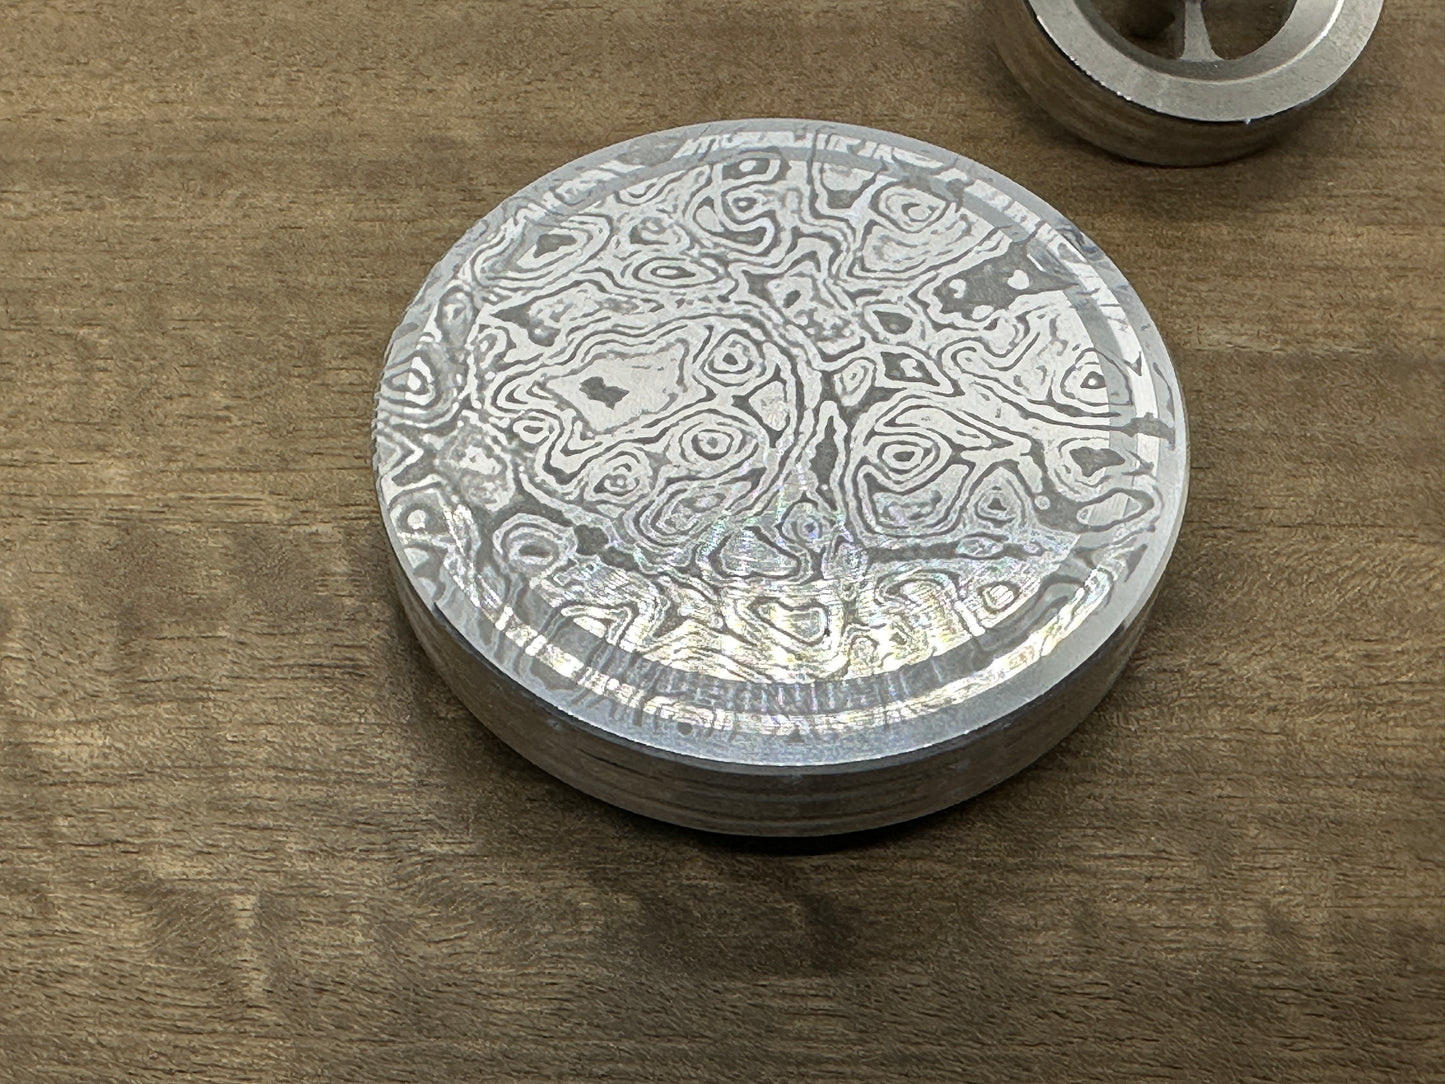 Aerospace grade Aluminum ALIEN bottom Spin base for Spinning Tops & Coins